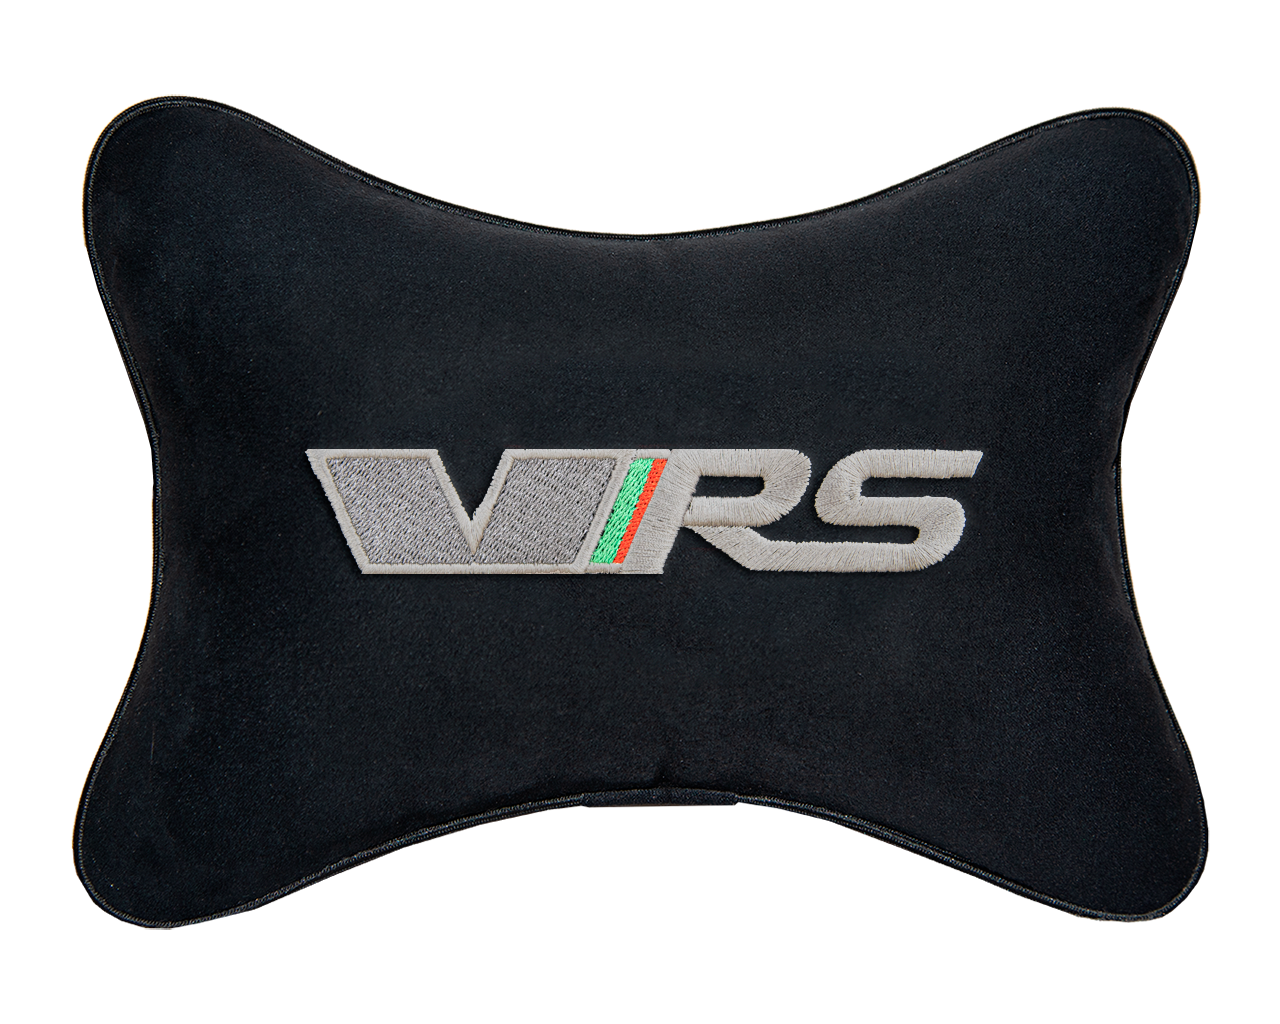 Подушка на подголовник алькантара Black с логотипом автомобиля SKODA VRS